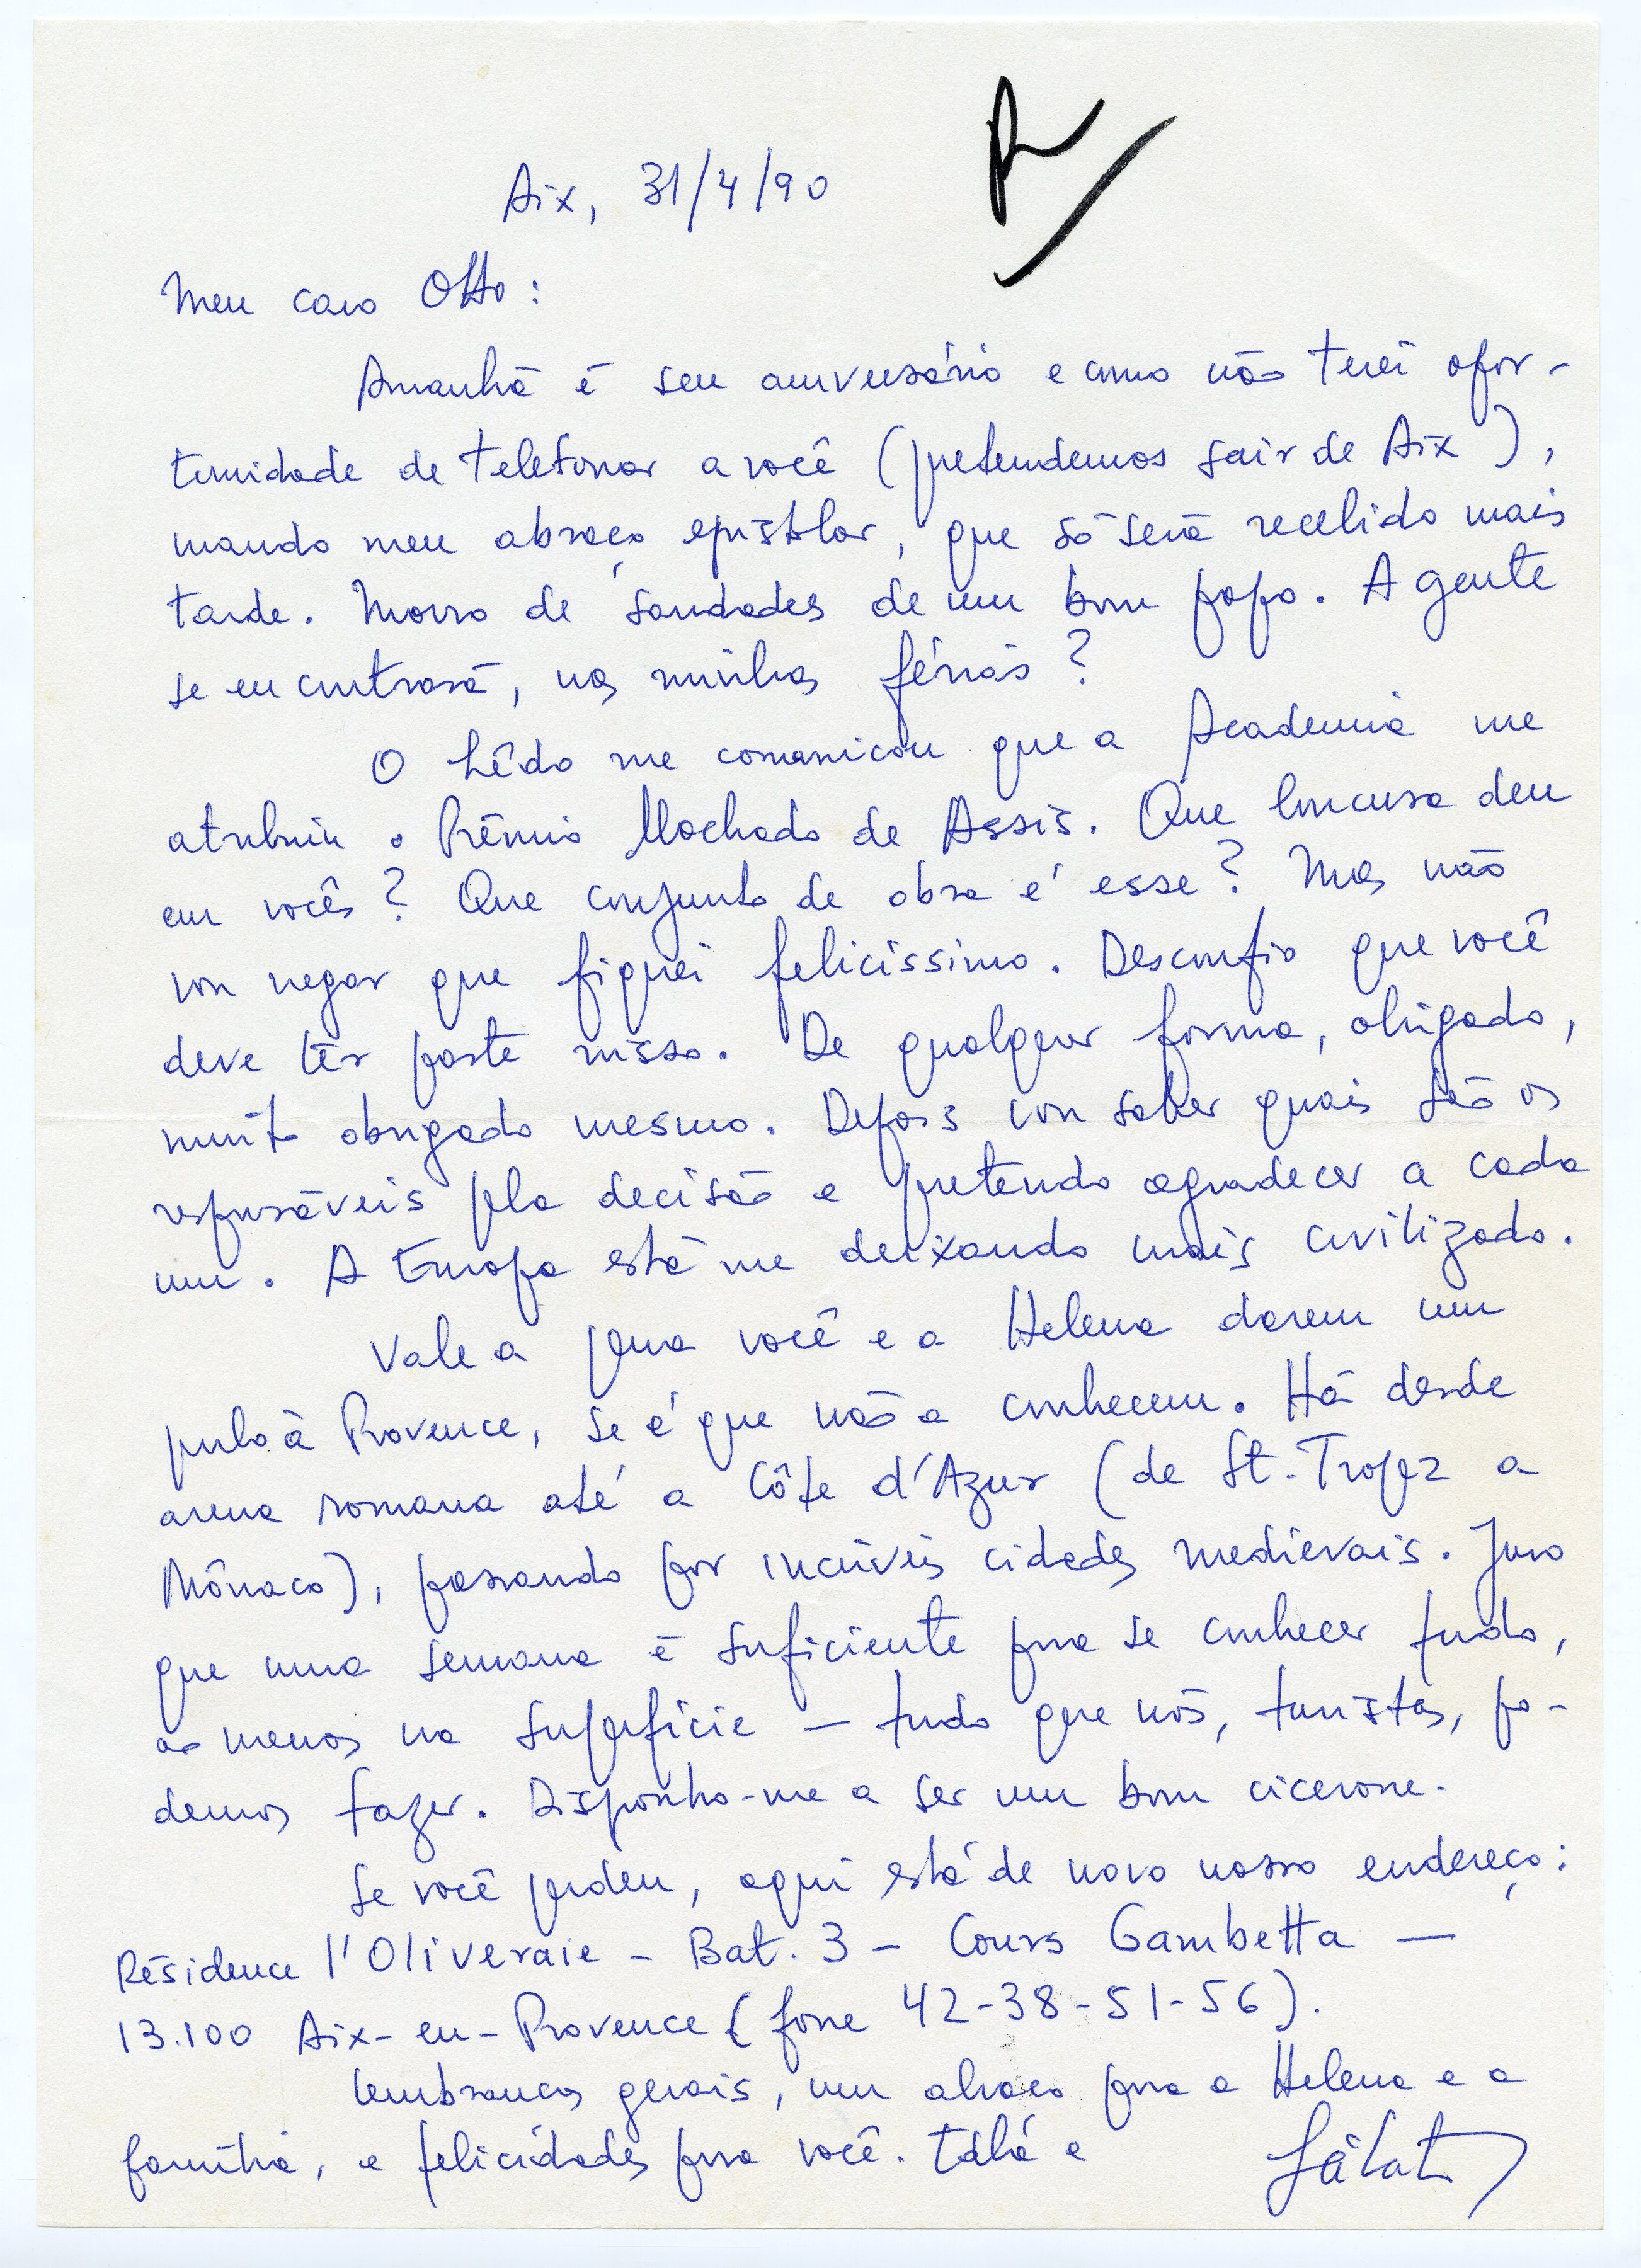 Carta de Sábato Magaldi, 31 de abril de 1990. Acervo Otto Lara Resende/ IMS